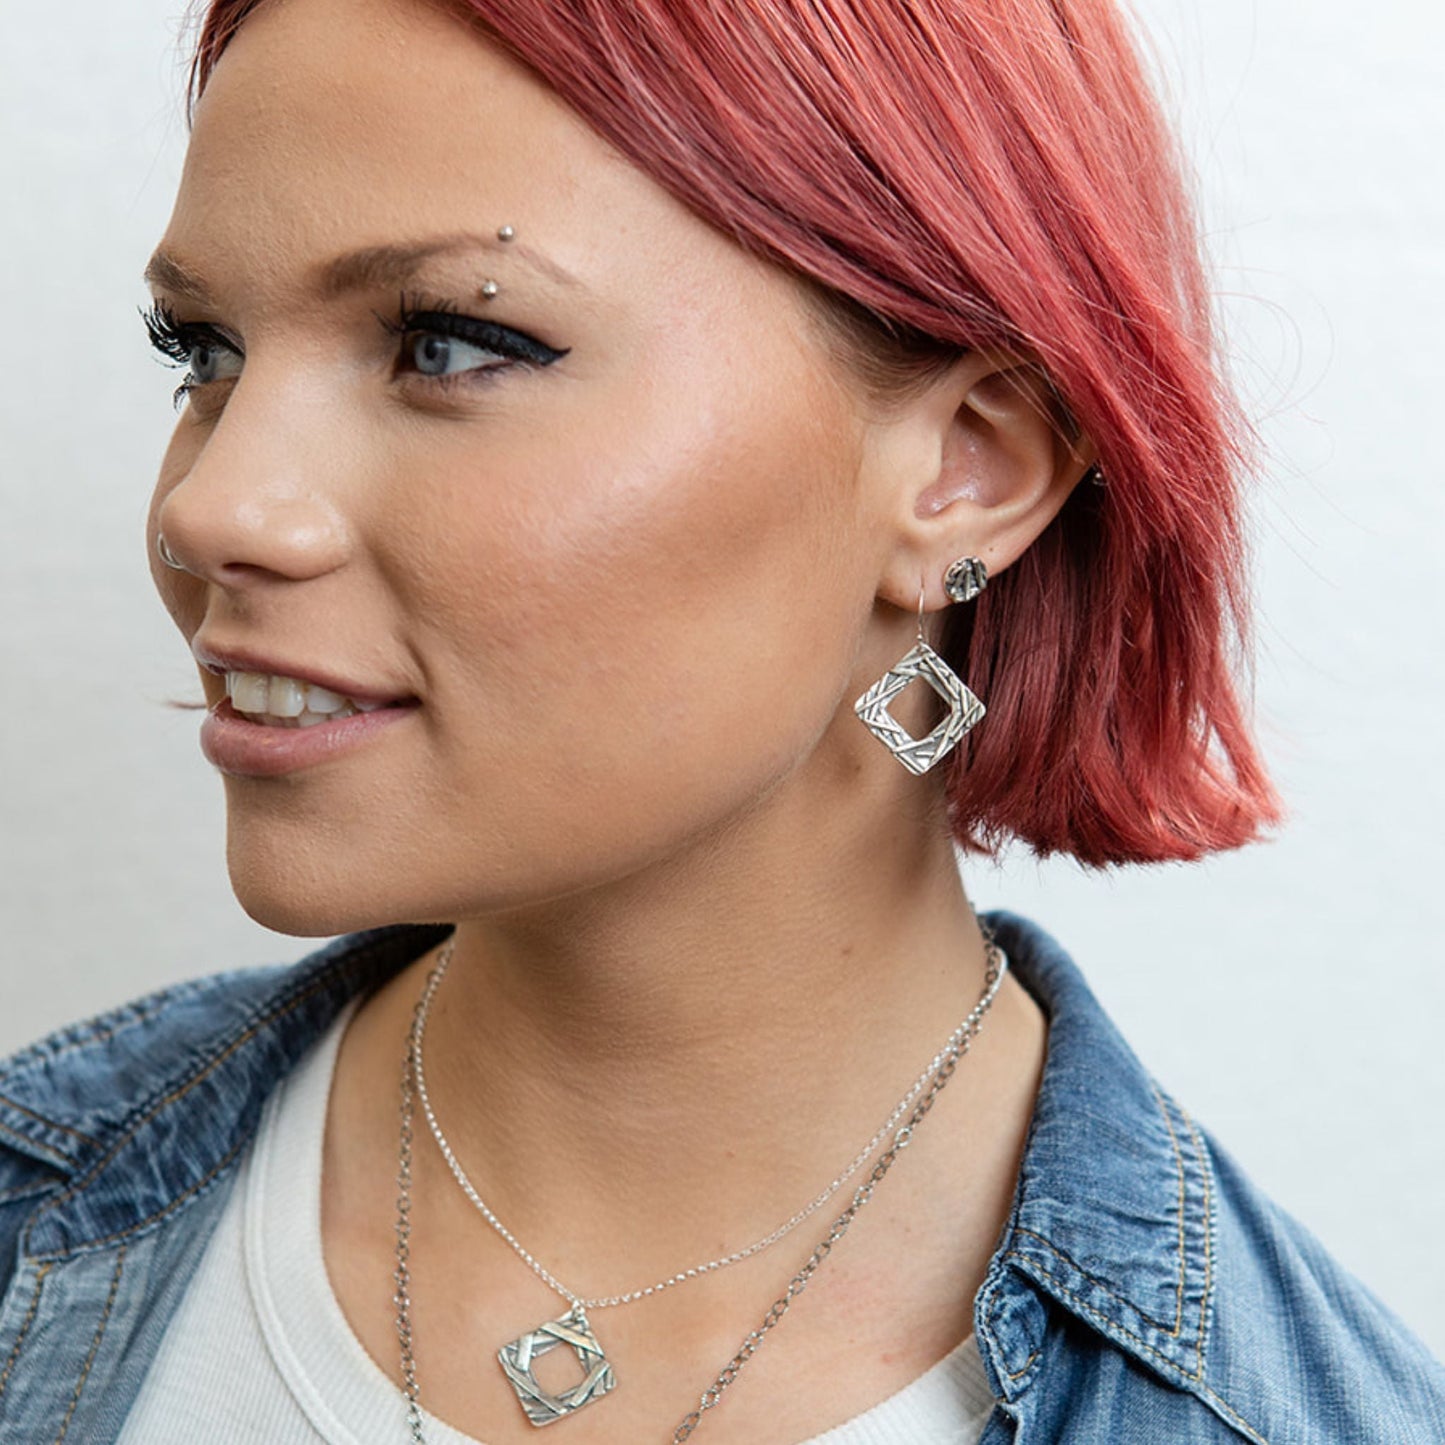 Square washer earrings on model